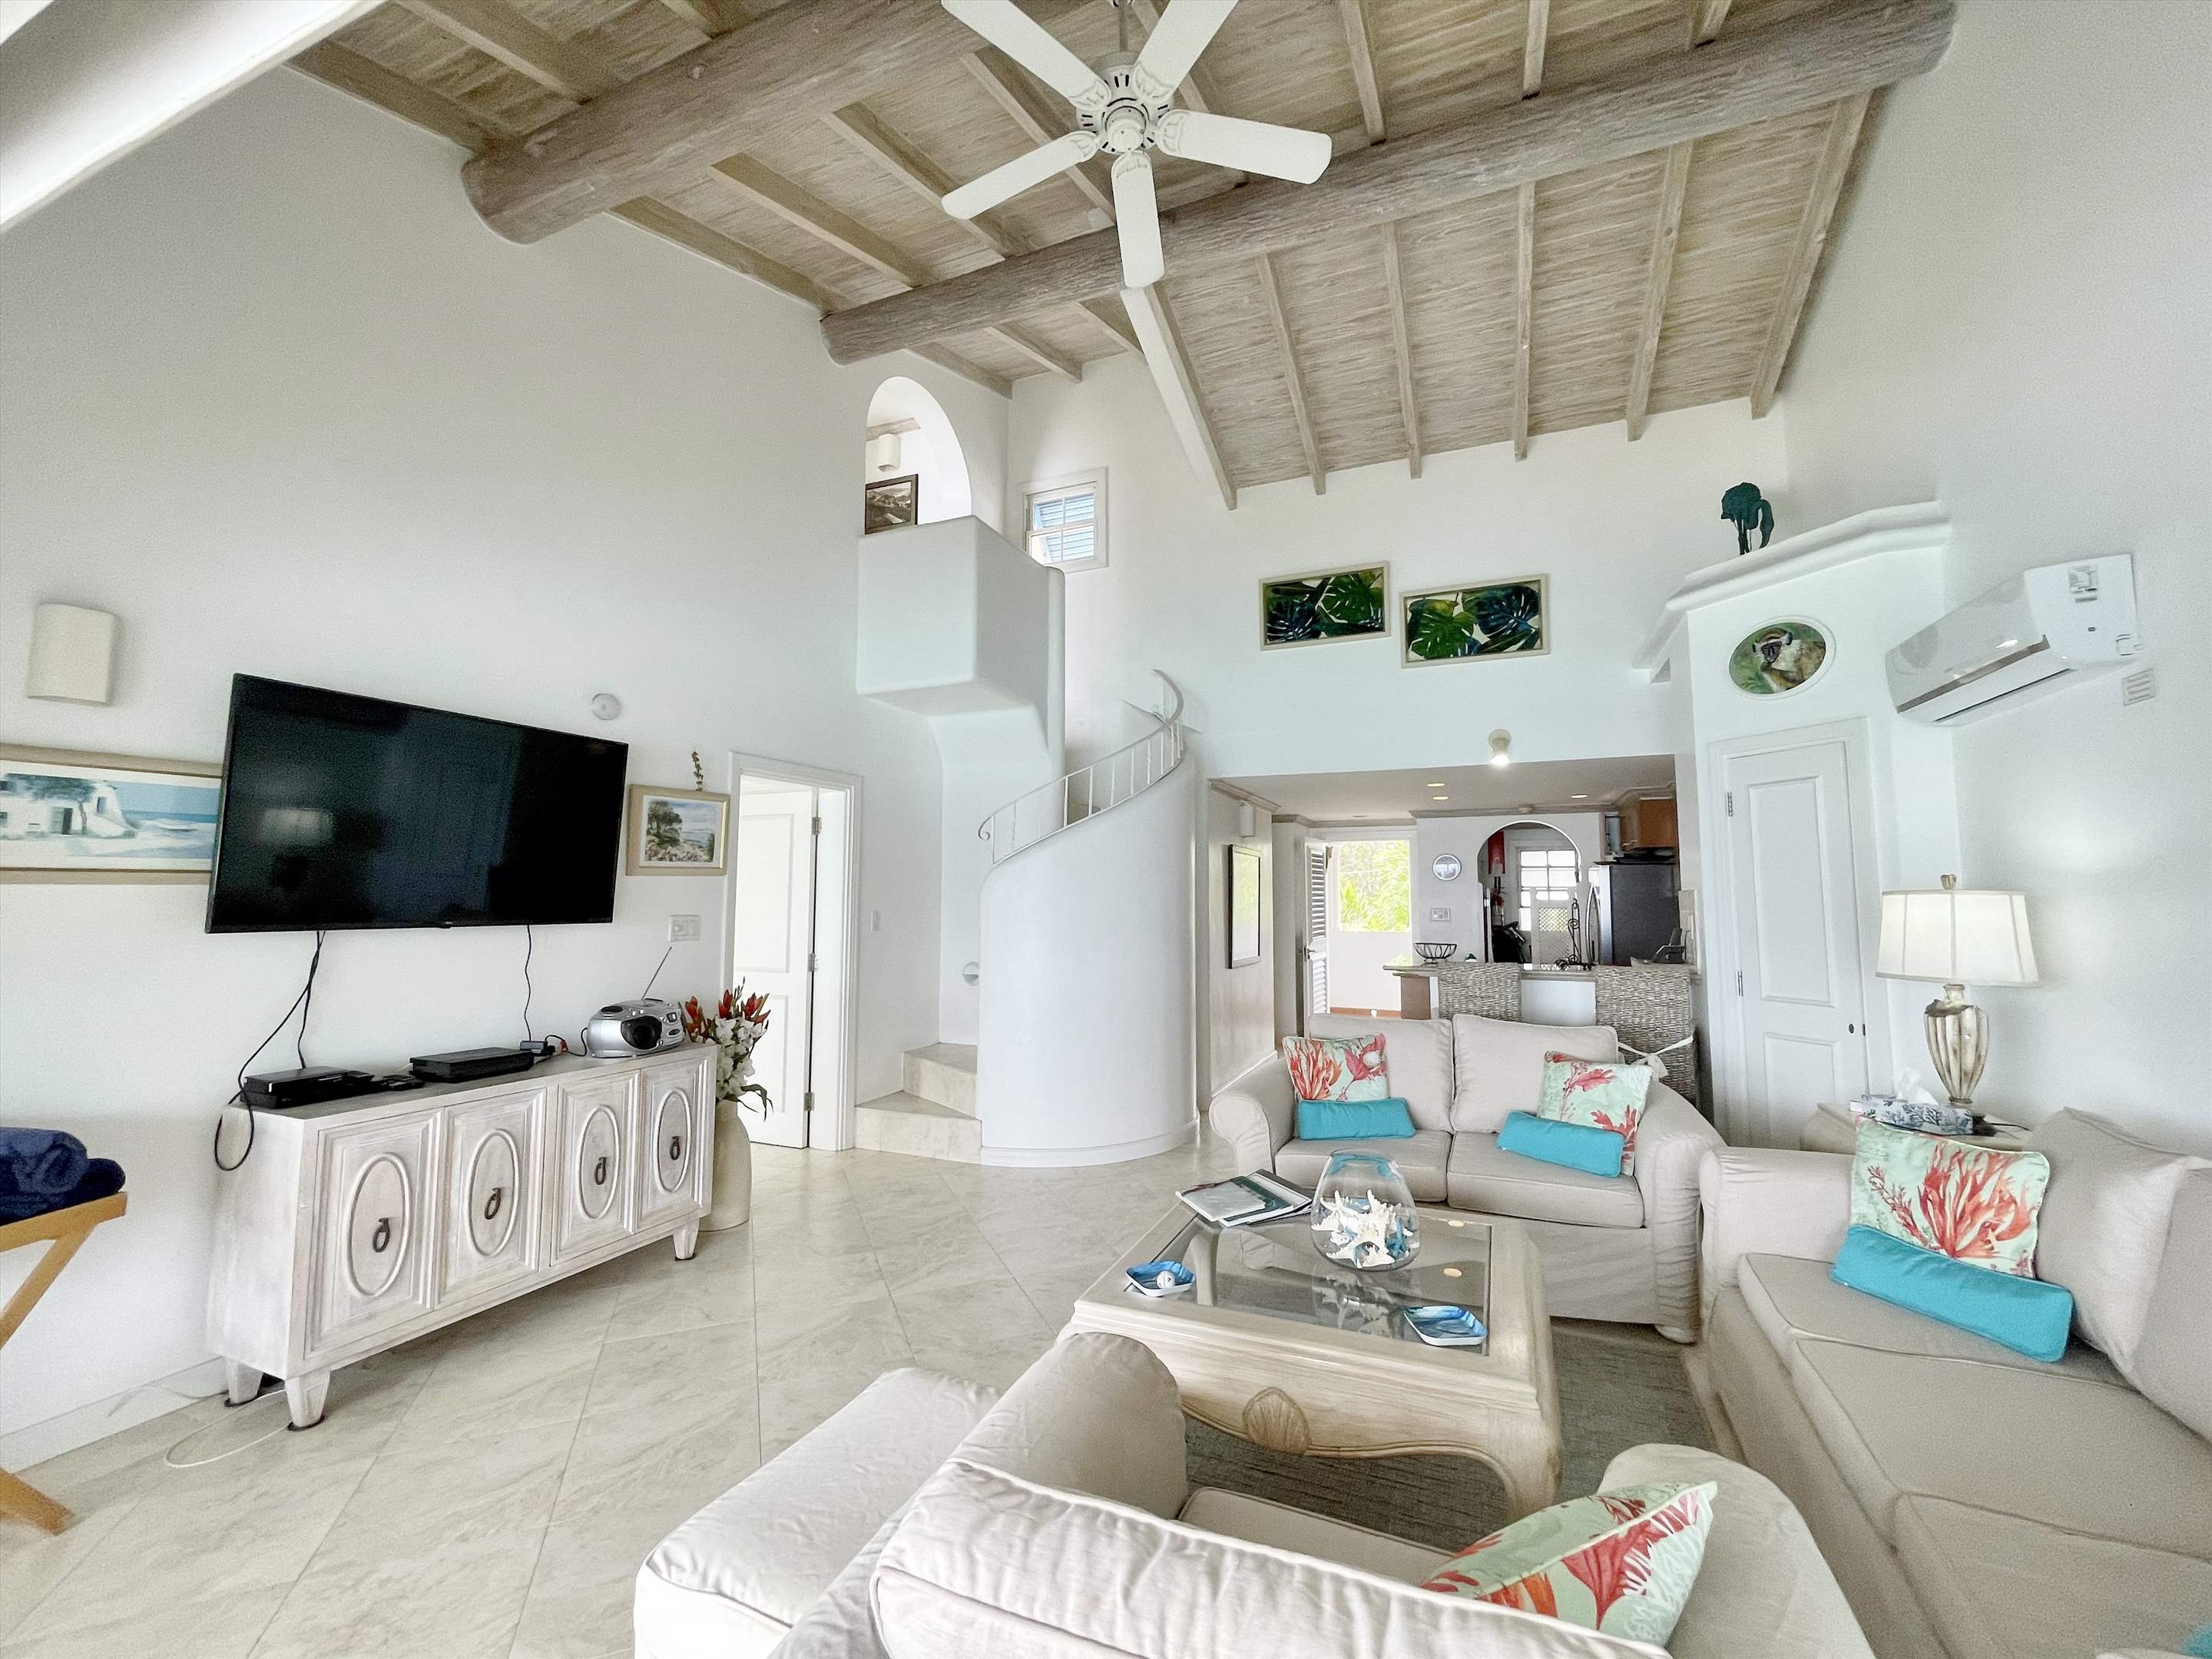 Villas on the Beach 403, 3 bedroom, 3 bedroom apartment in St. James & West Coast, Barbados Photo #5